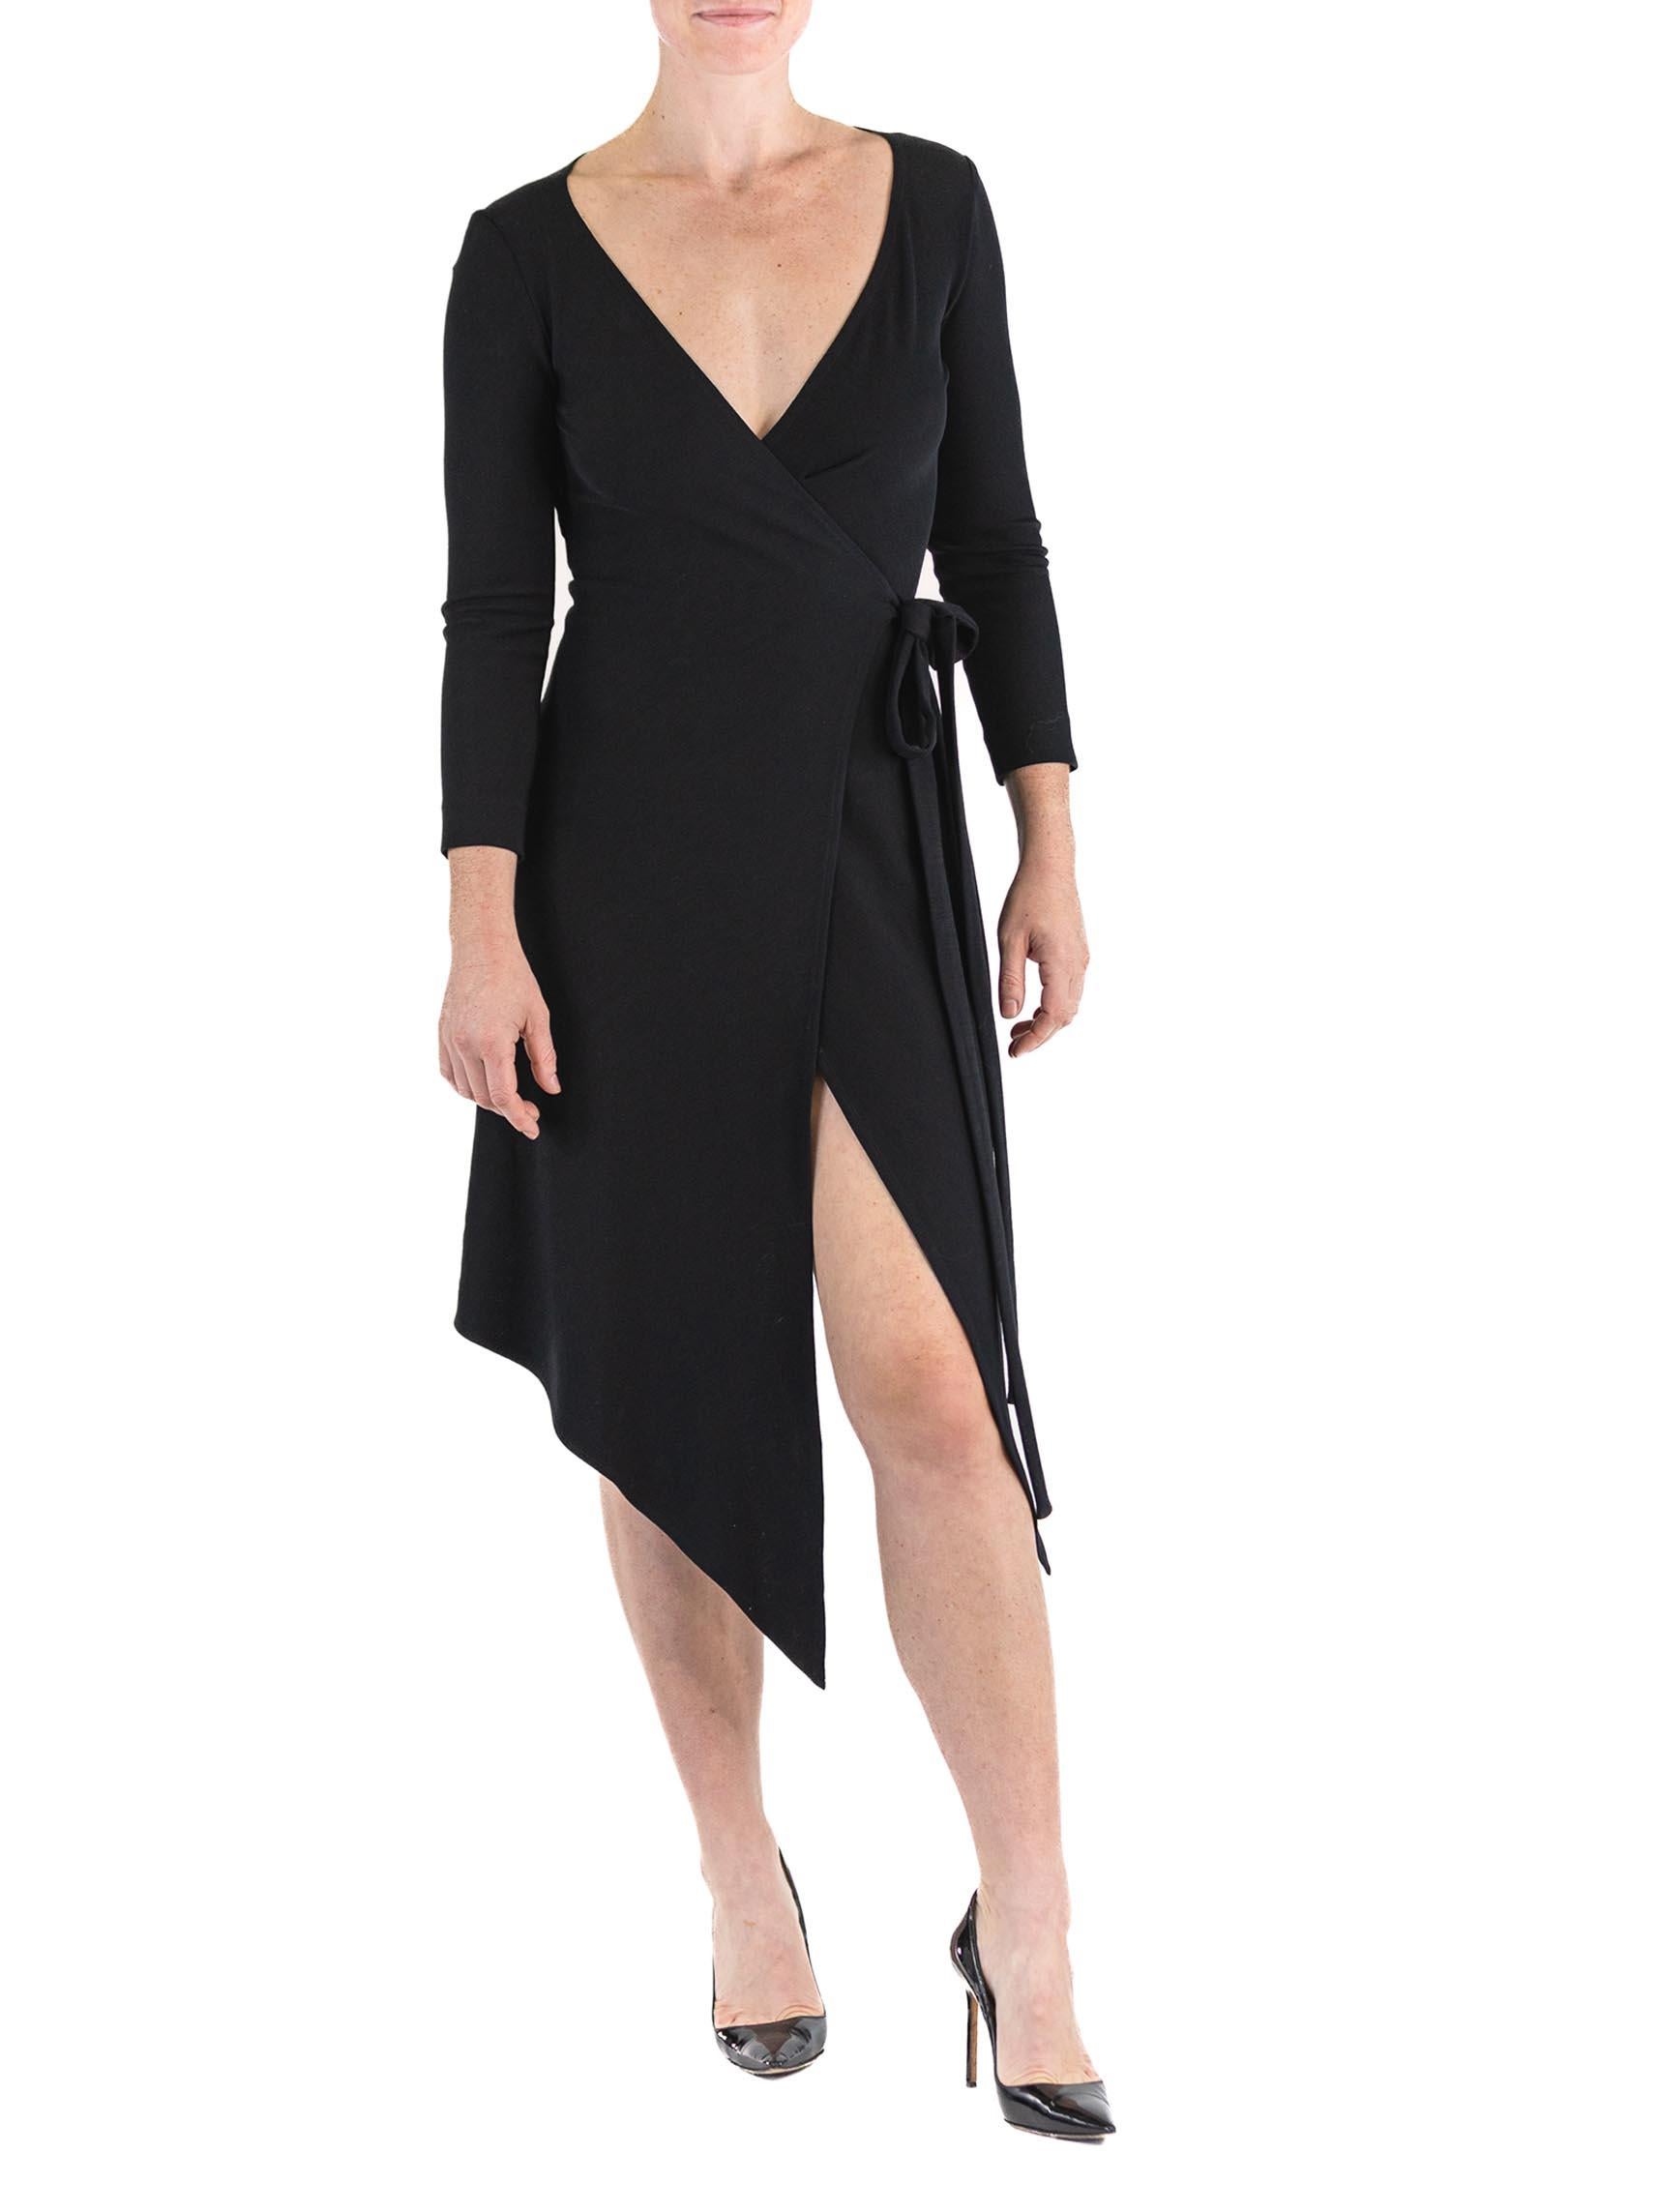 Women's 1980S DONNA KARAN Black Wool Knit Belted Wrap Dress For Sale